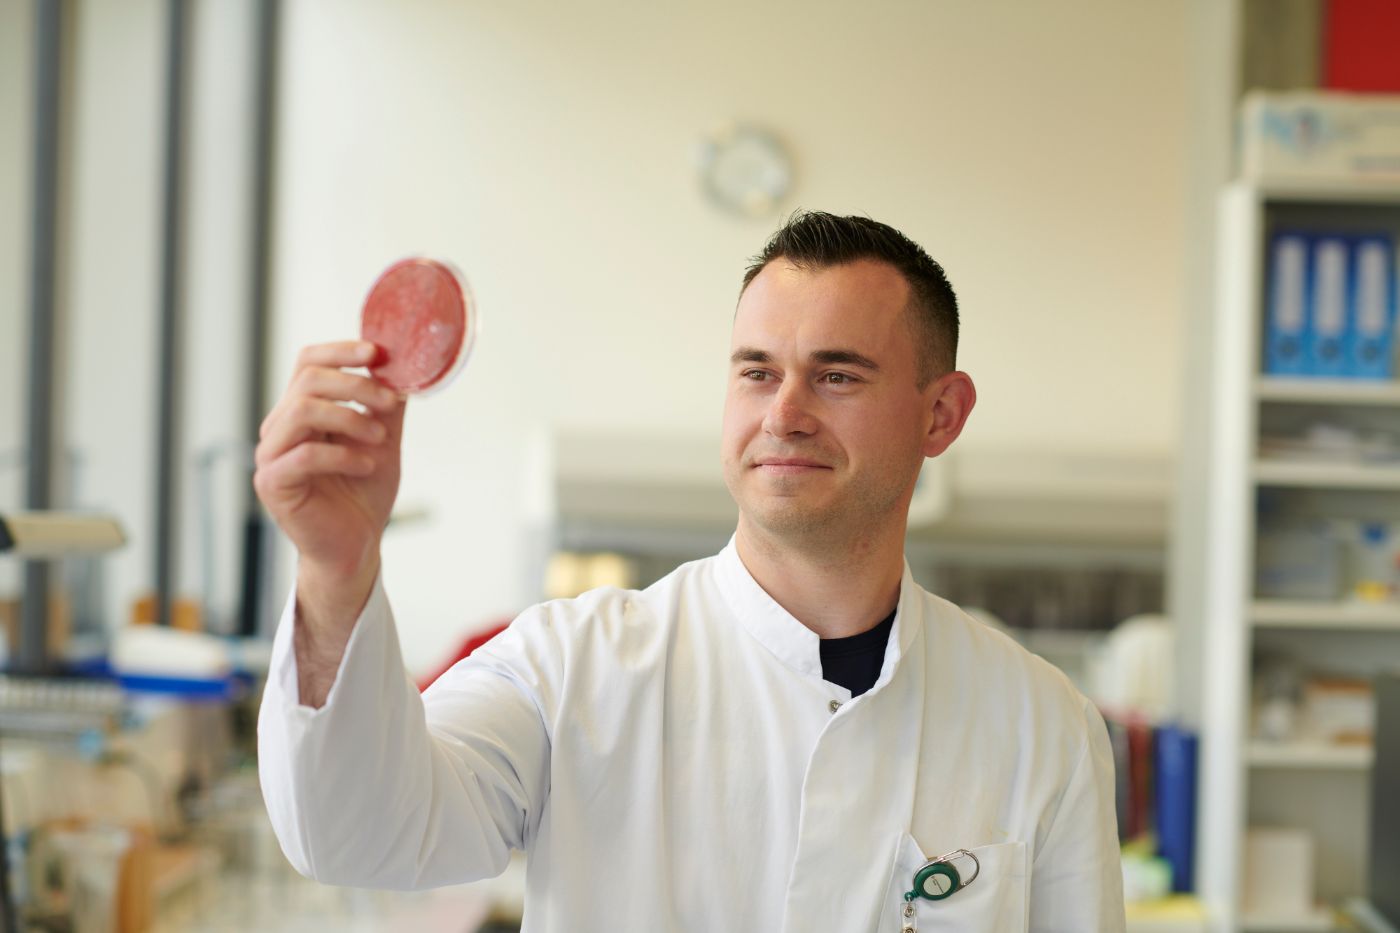 Bacteriology employee checks sample on the Petri dish